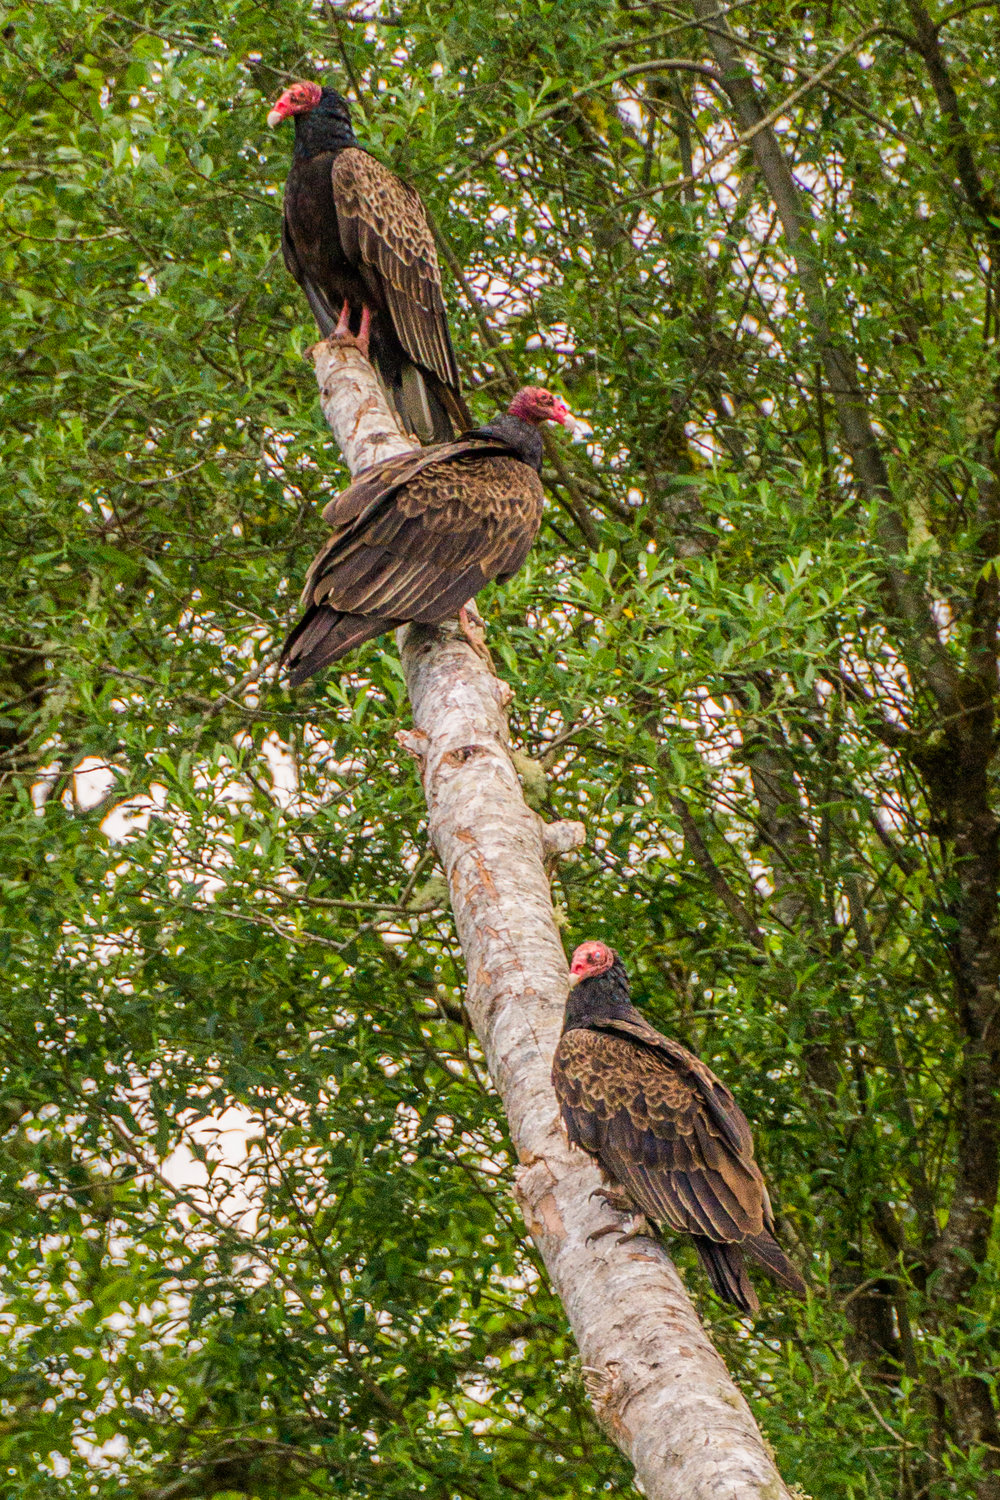 Turkey vultures sit on a fallen tree near the Chehalis River in Montesano.